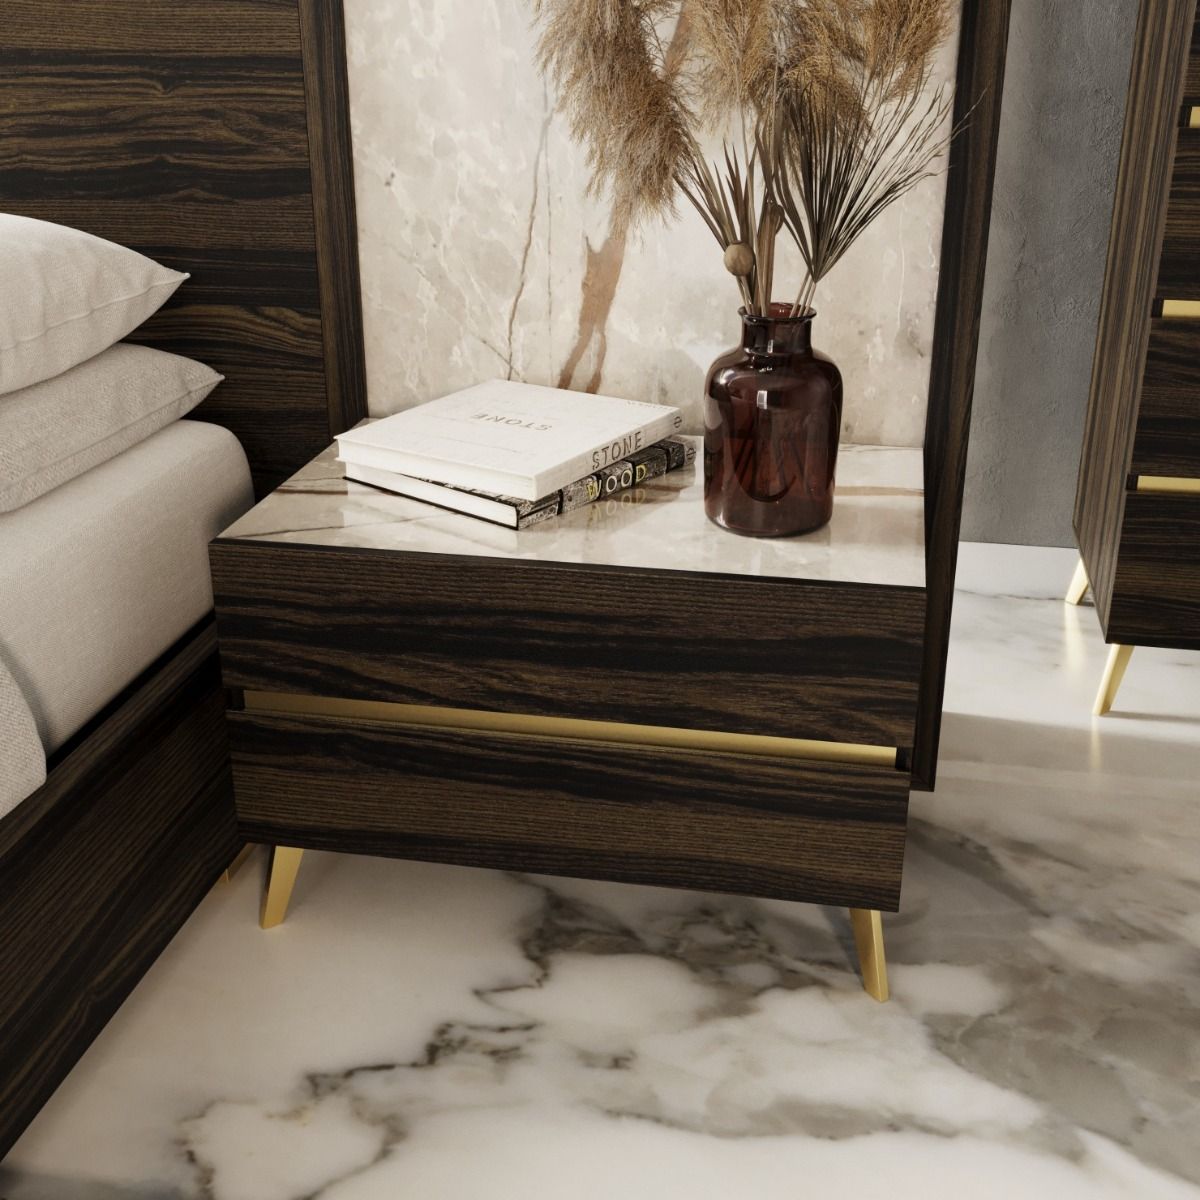 Nova Domus Velondra - Modern Eucalypto + Marble Bed with Two Nightstands